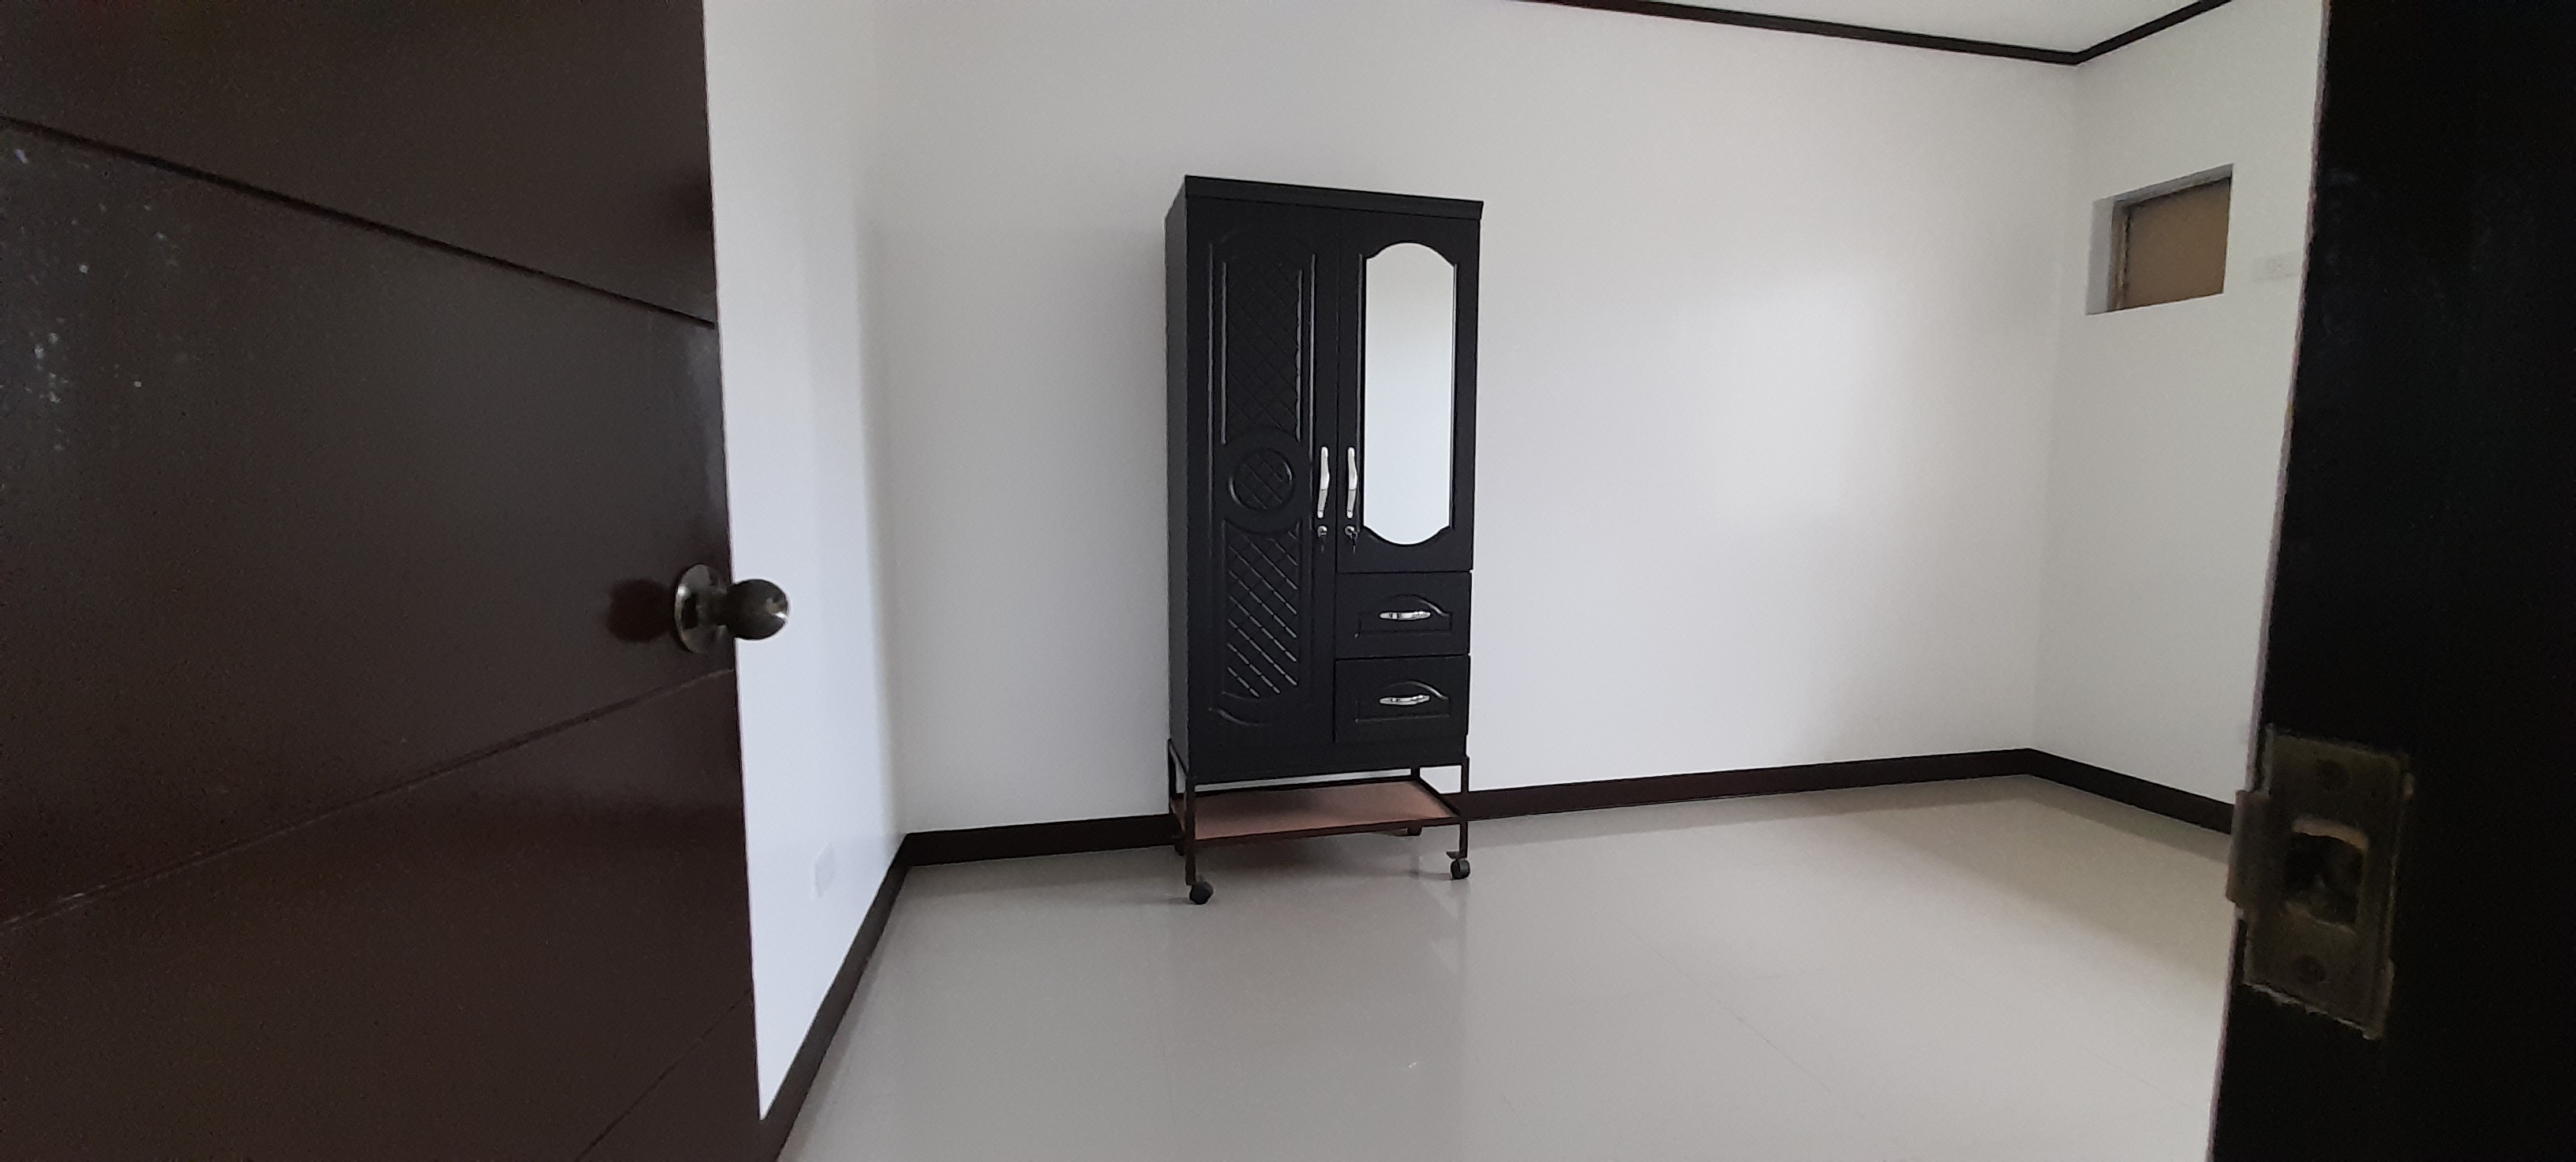 2-bedroom-unfurnished-apartment-in-mandaue-city-cebu